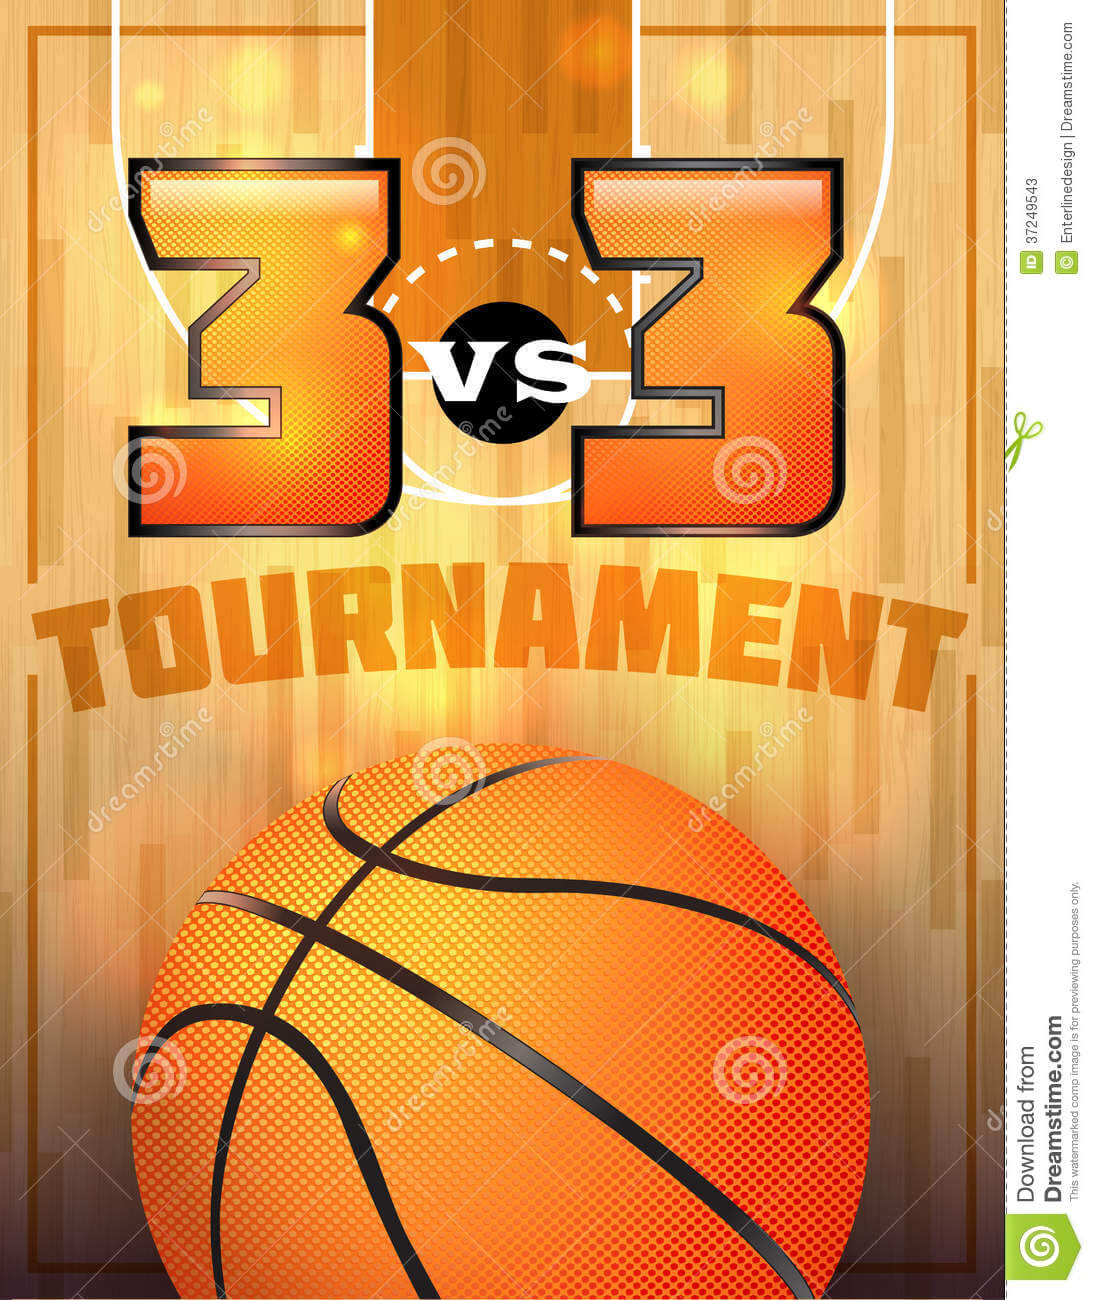 002 Template Ideas On Basketball Tournament Flyer Free Pertaining To 3 On 3 Basketball Tournament Flyer Template